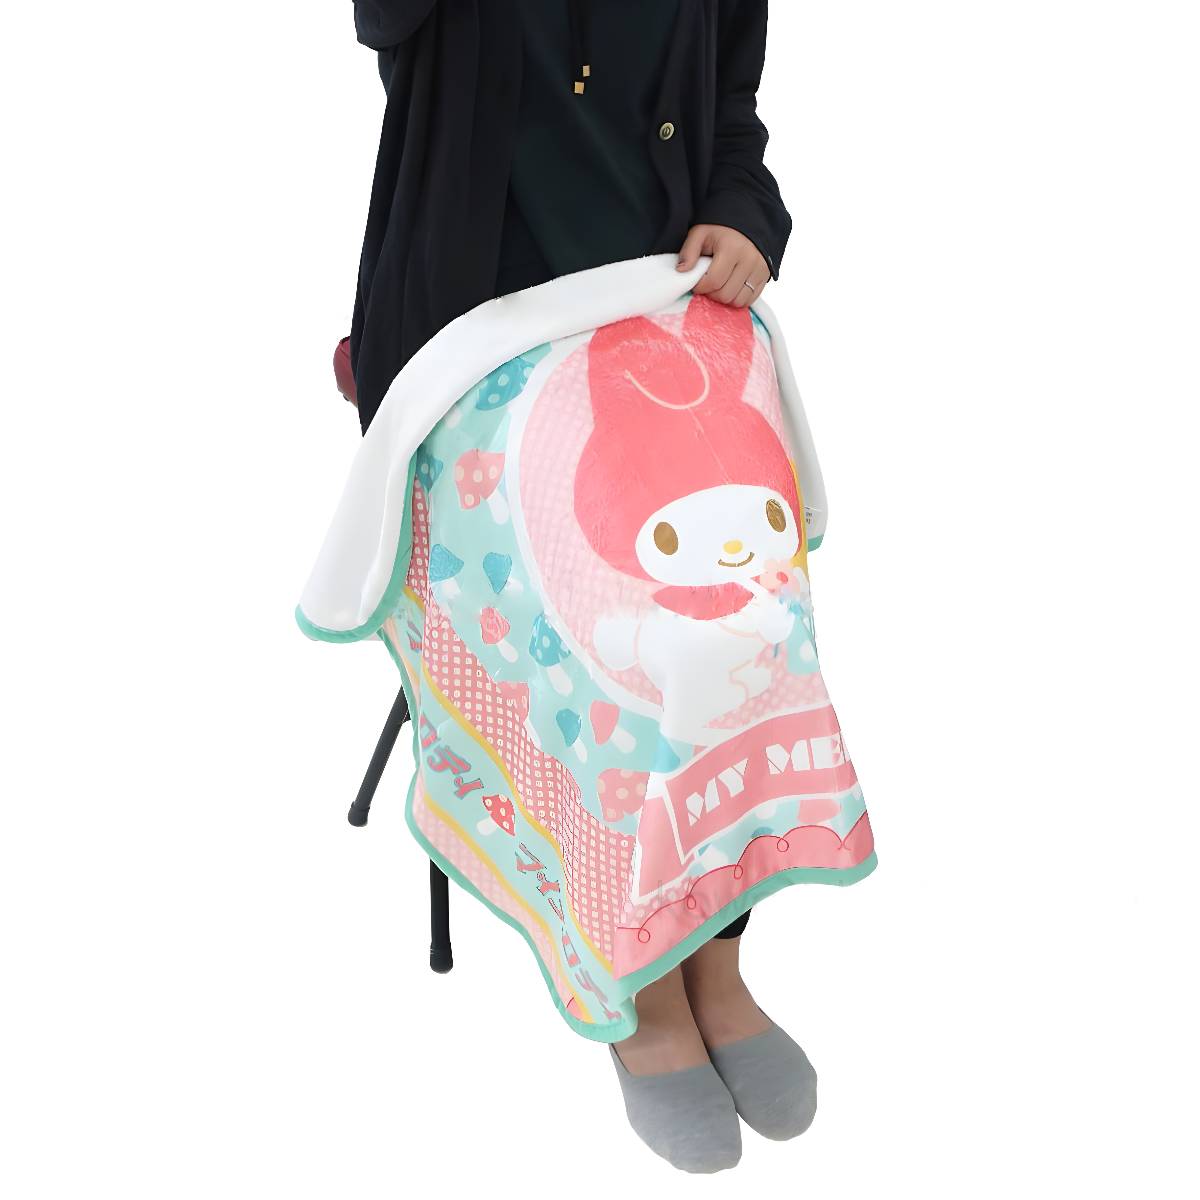 Knee Blanket - Sanrio My Melody 100x70cm (Japan Edition)